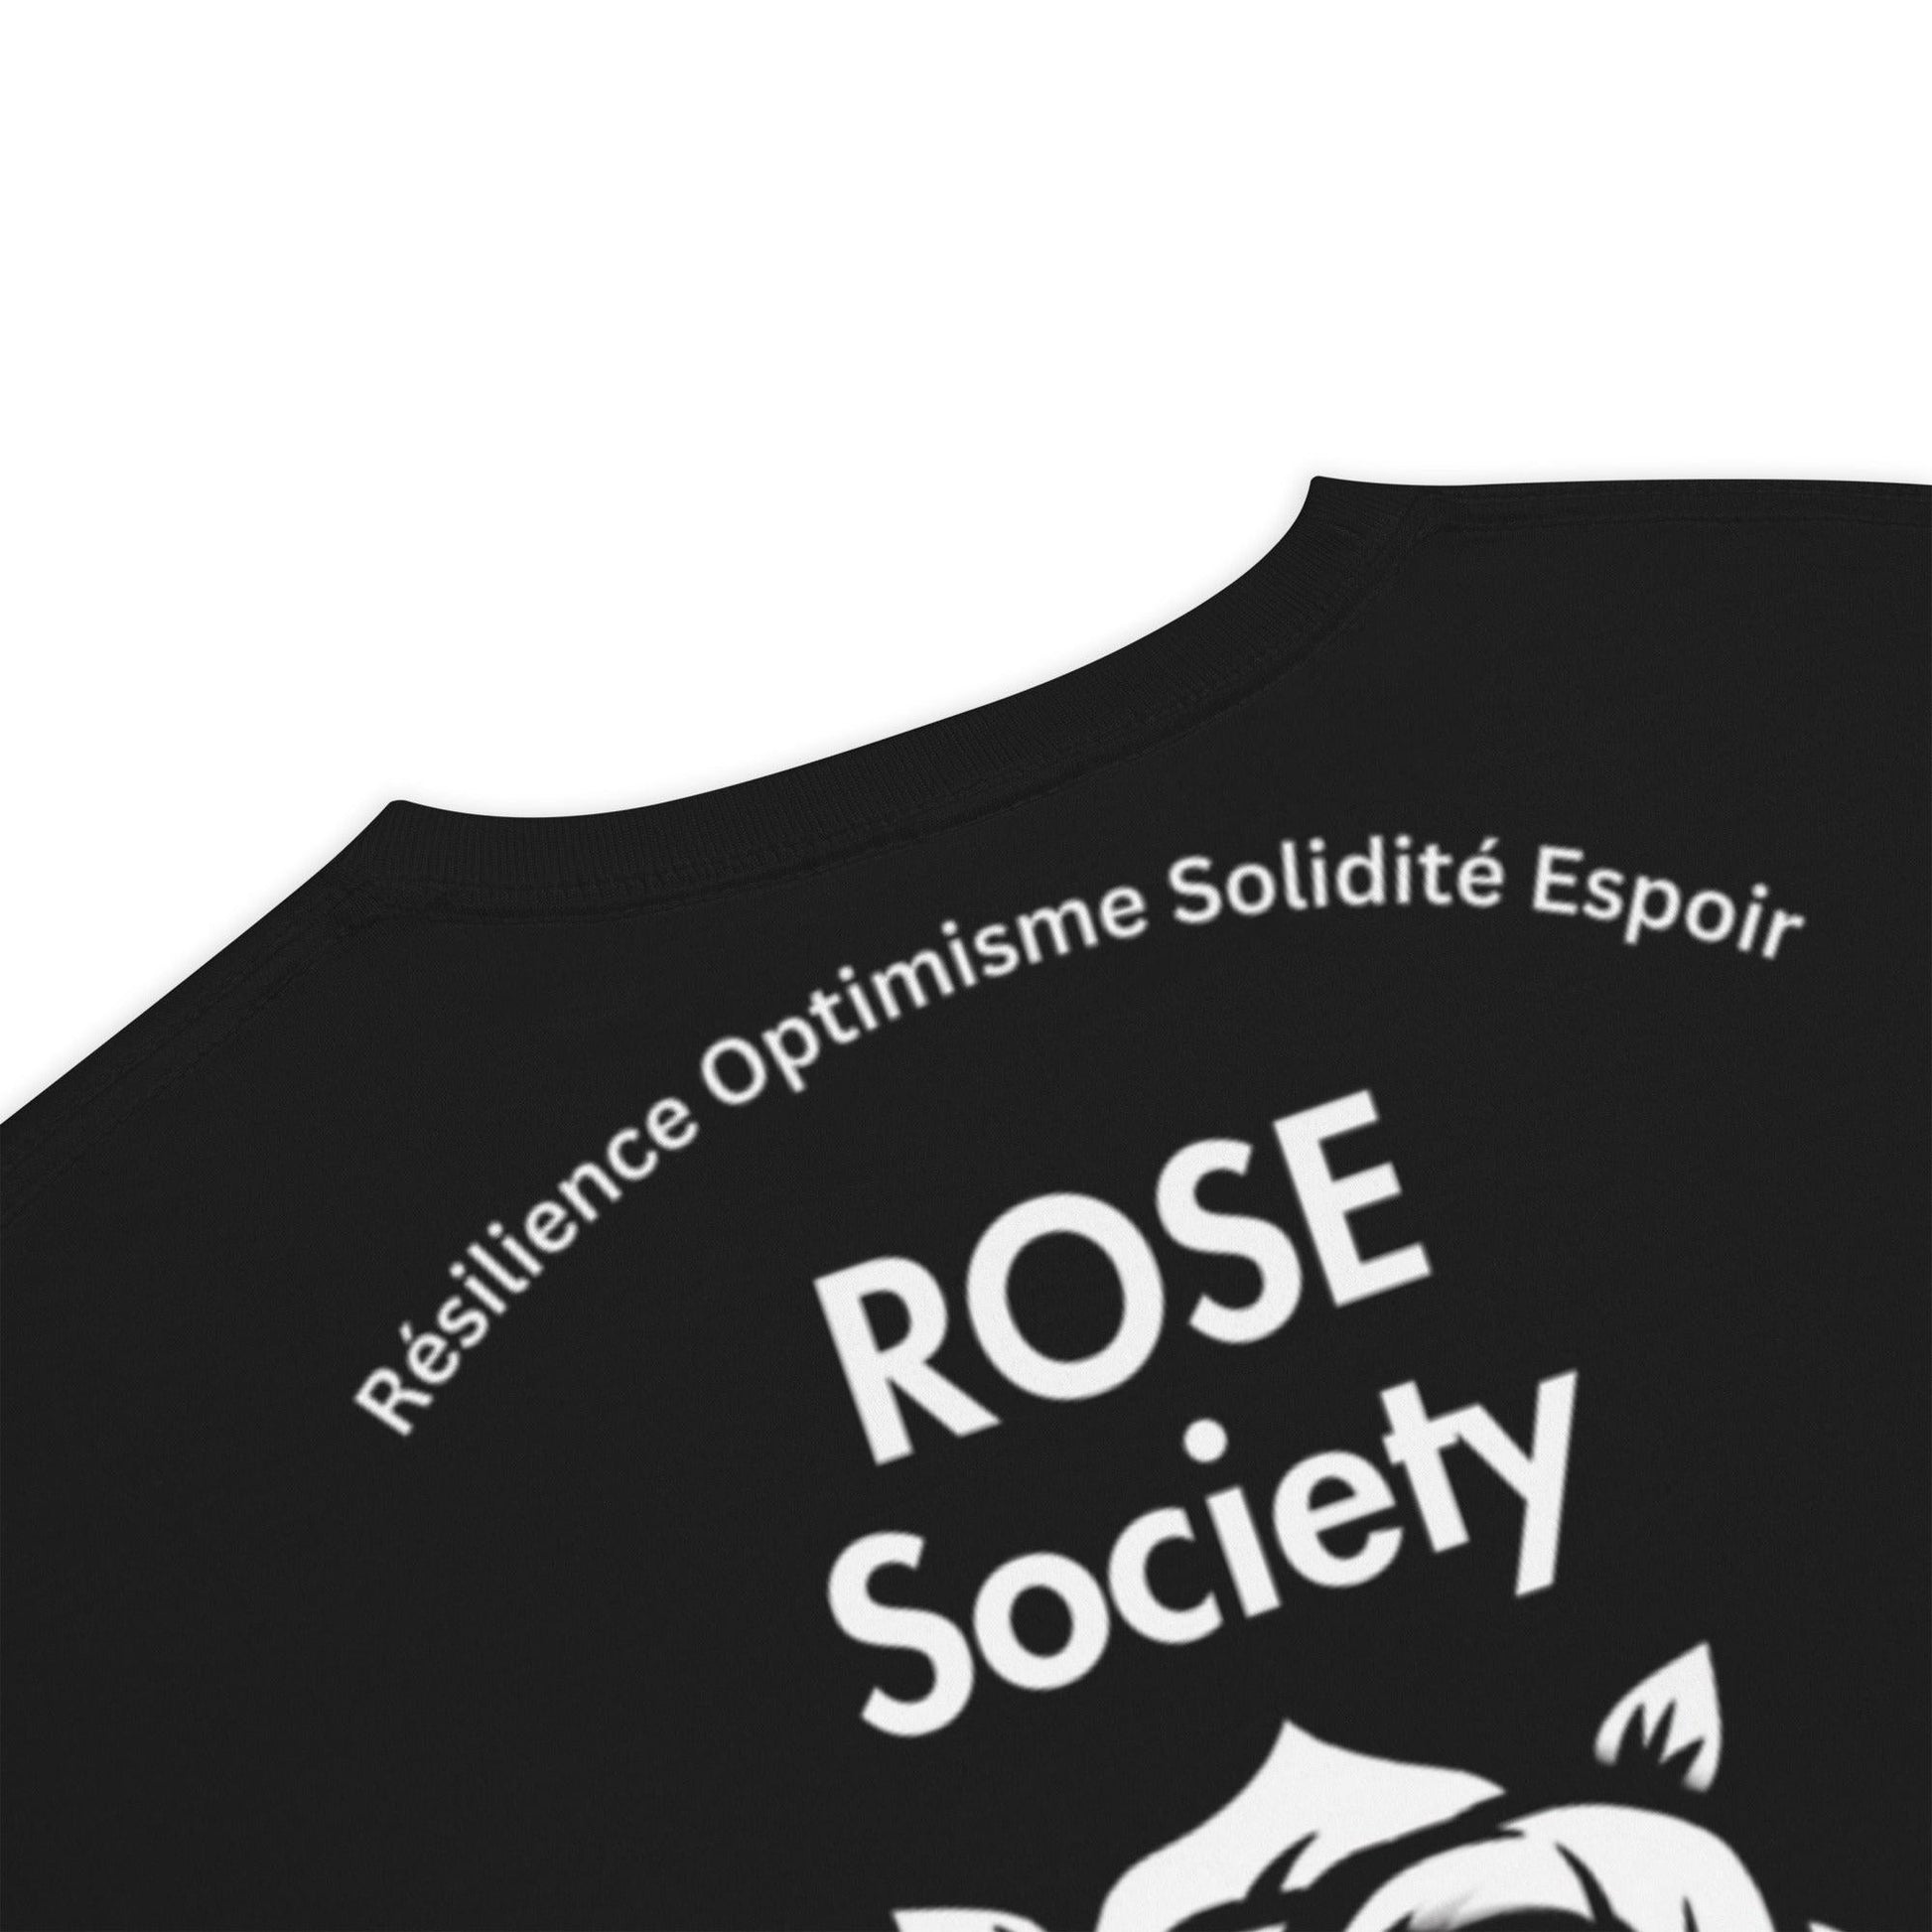 Volcanic Venture Bear T-Shirt Black - ROSE Society